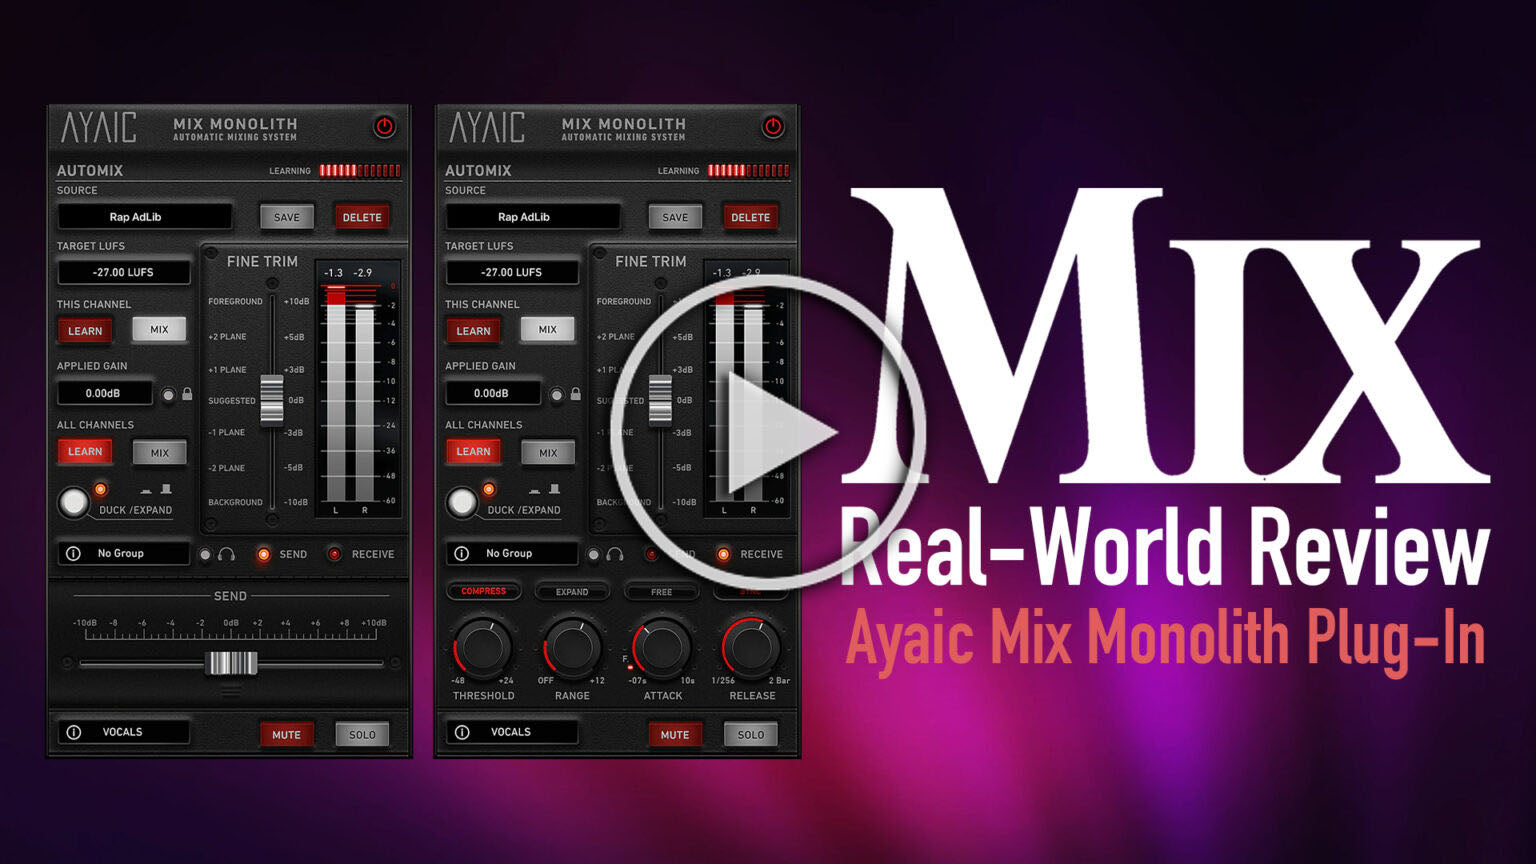 Mix Monolith Review Mix Magazine Ayaic Plug-In